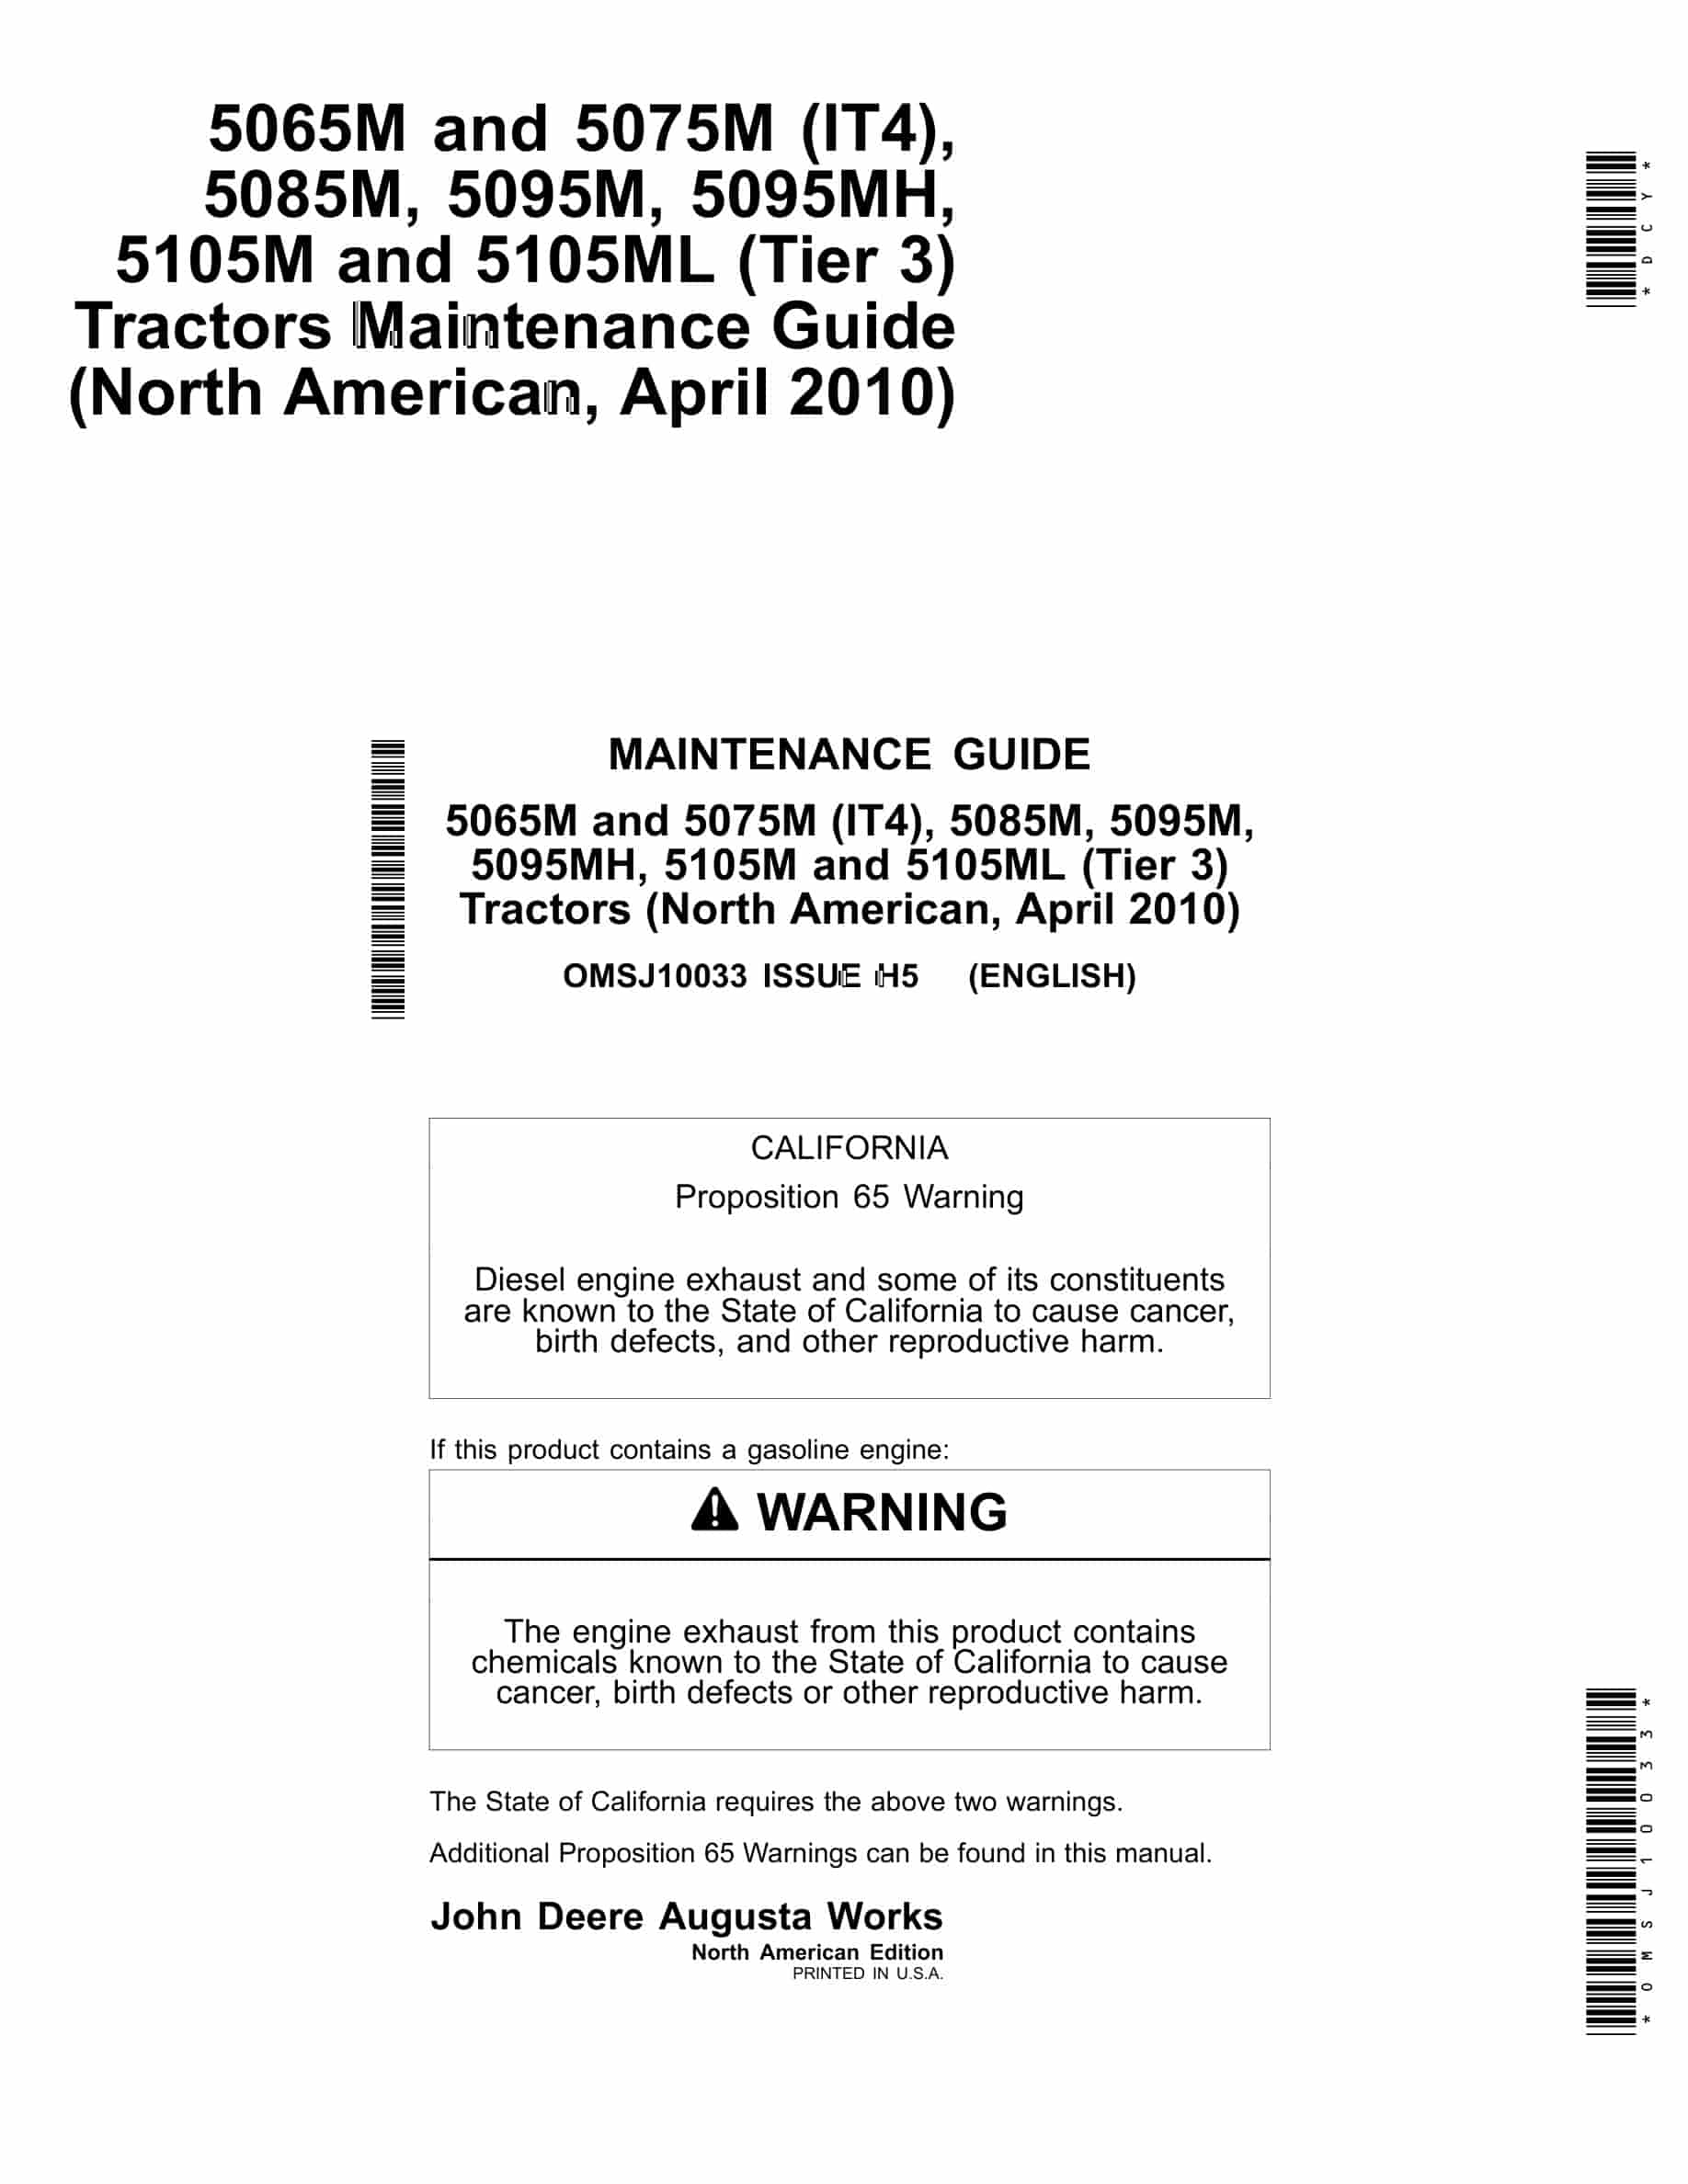 John Deere 5065M and 5075M (IT4), 5085M, 5095M, 5095MH, 5105M and 5105ML (Tier 3) Tractor Operator Manual OMSJ10033-1